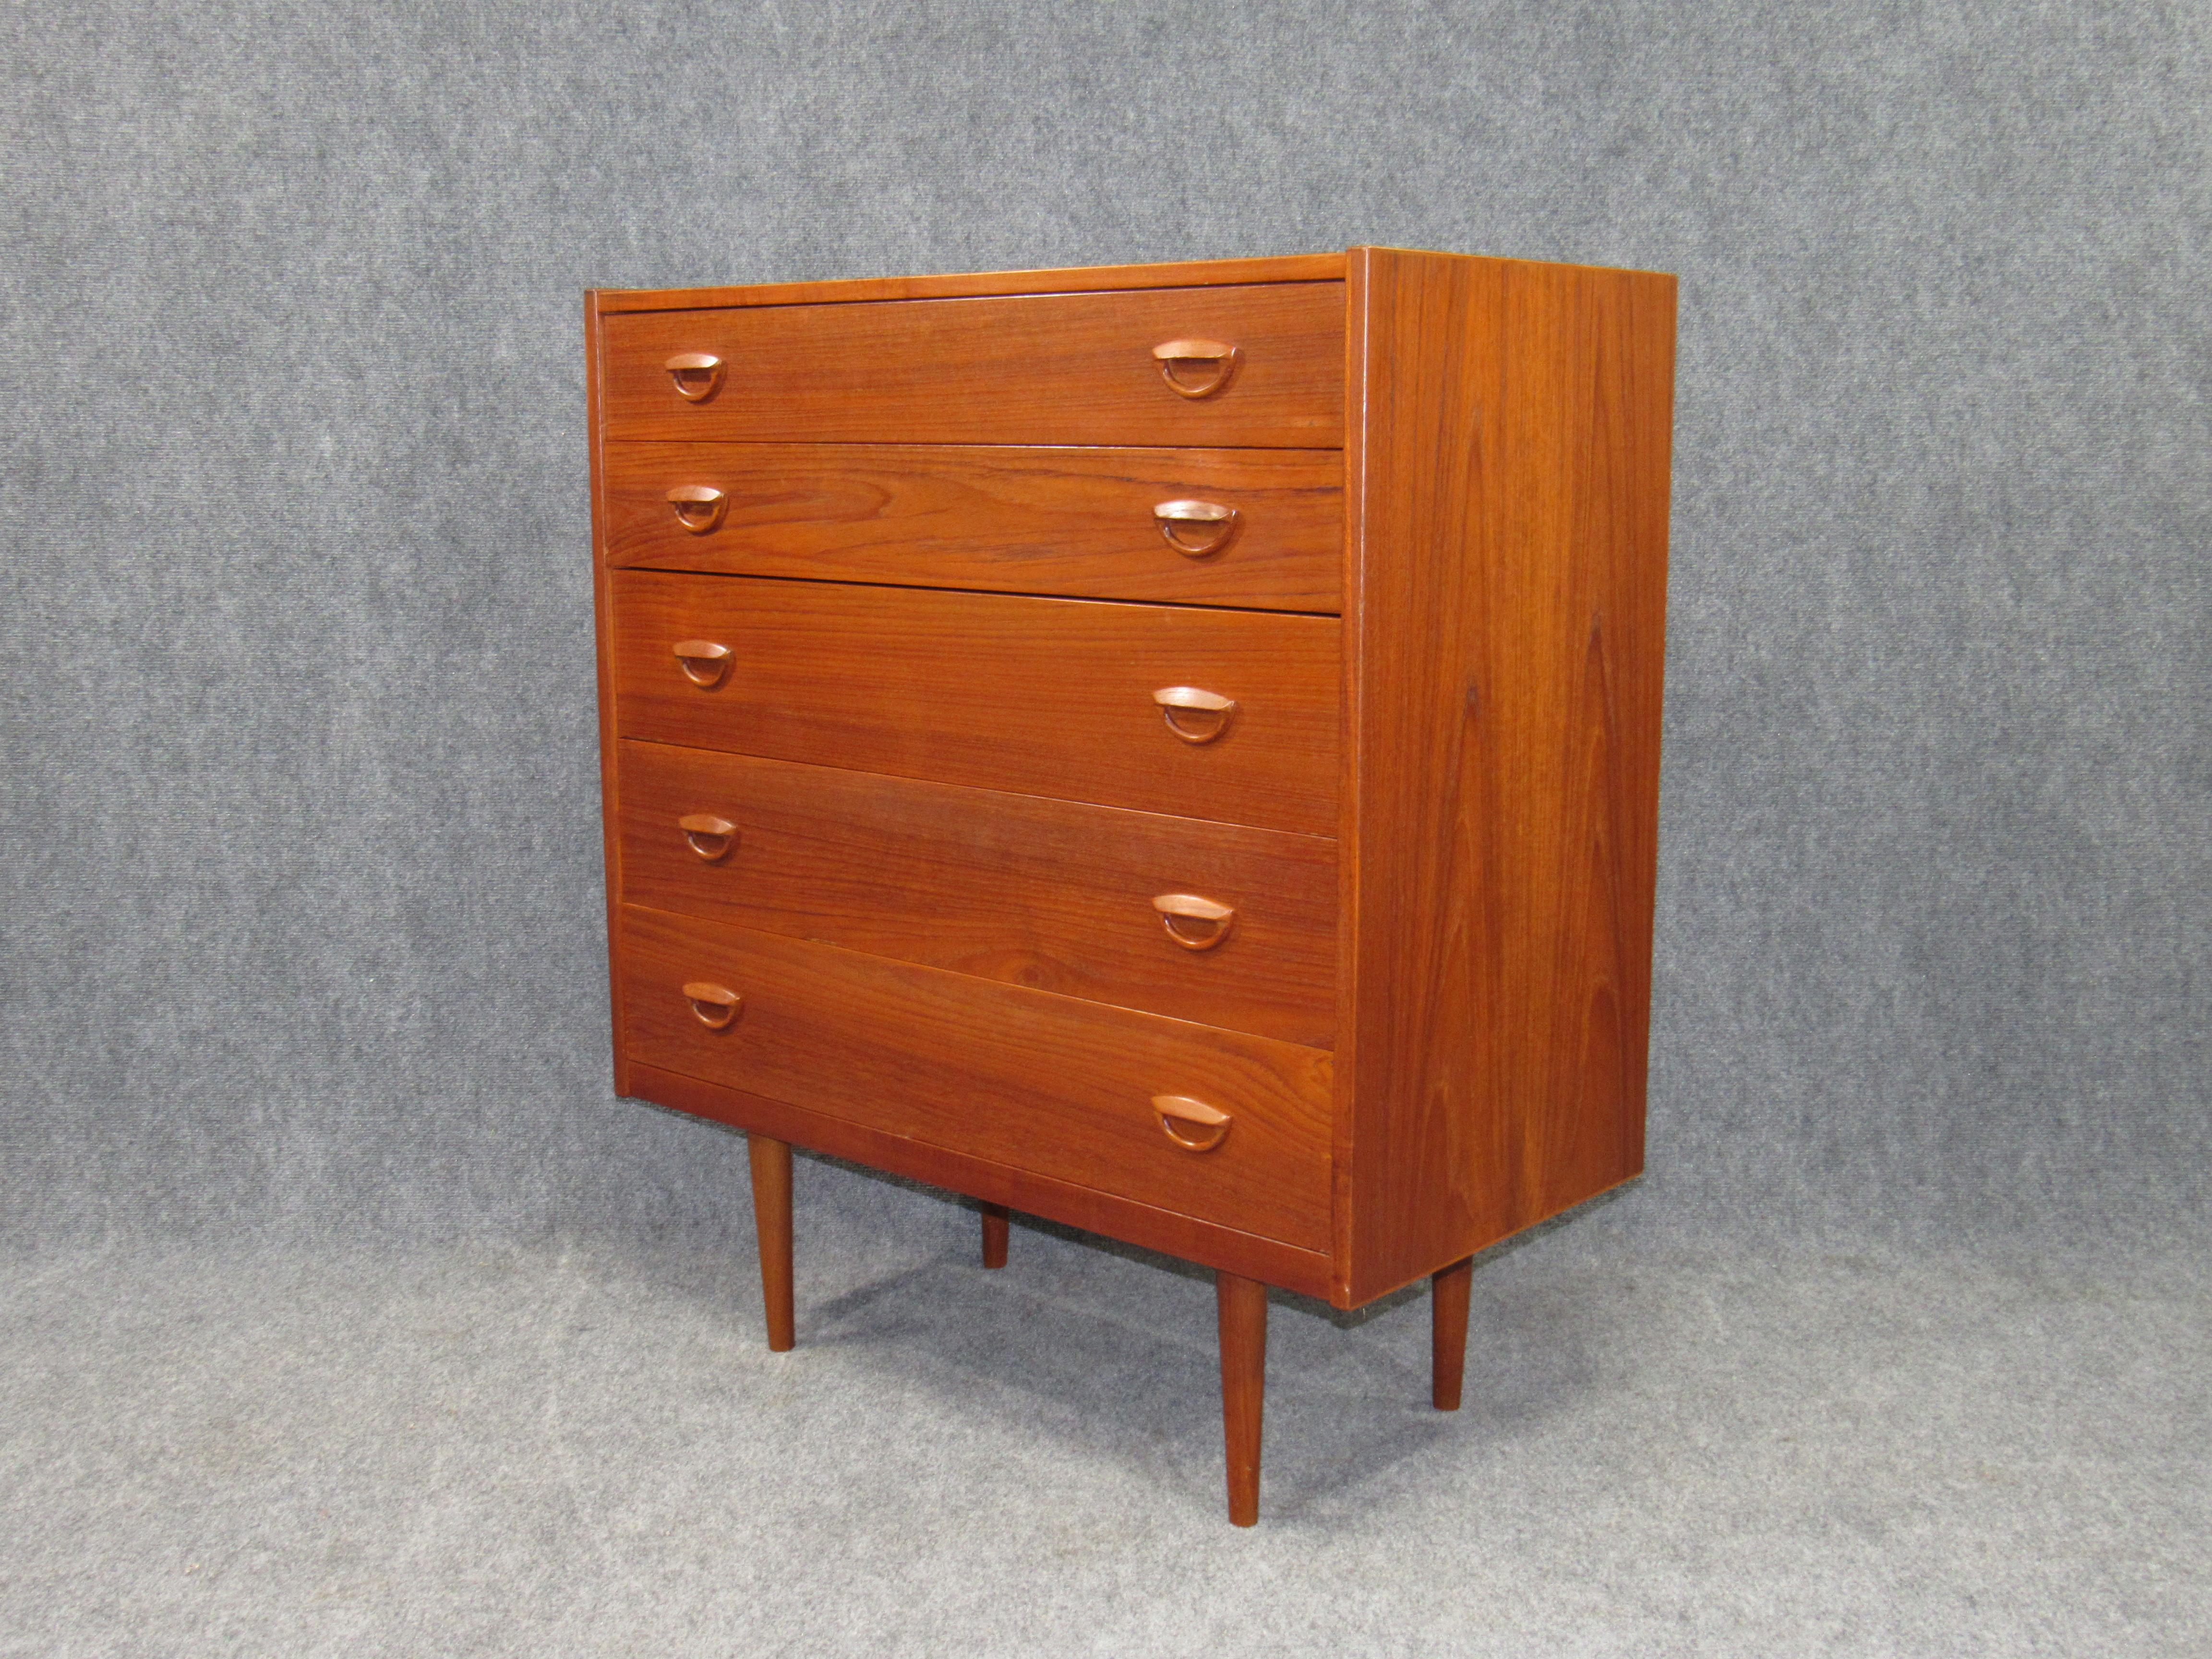 Danish modern teak dresser chest of drawers in style of Kai Kristiansen. Excellent vintage condition.